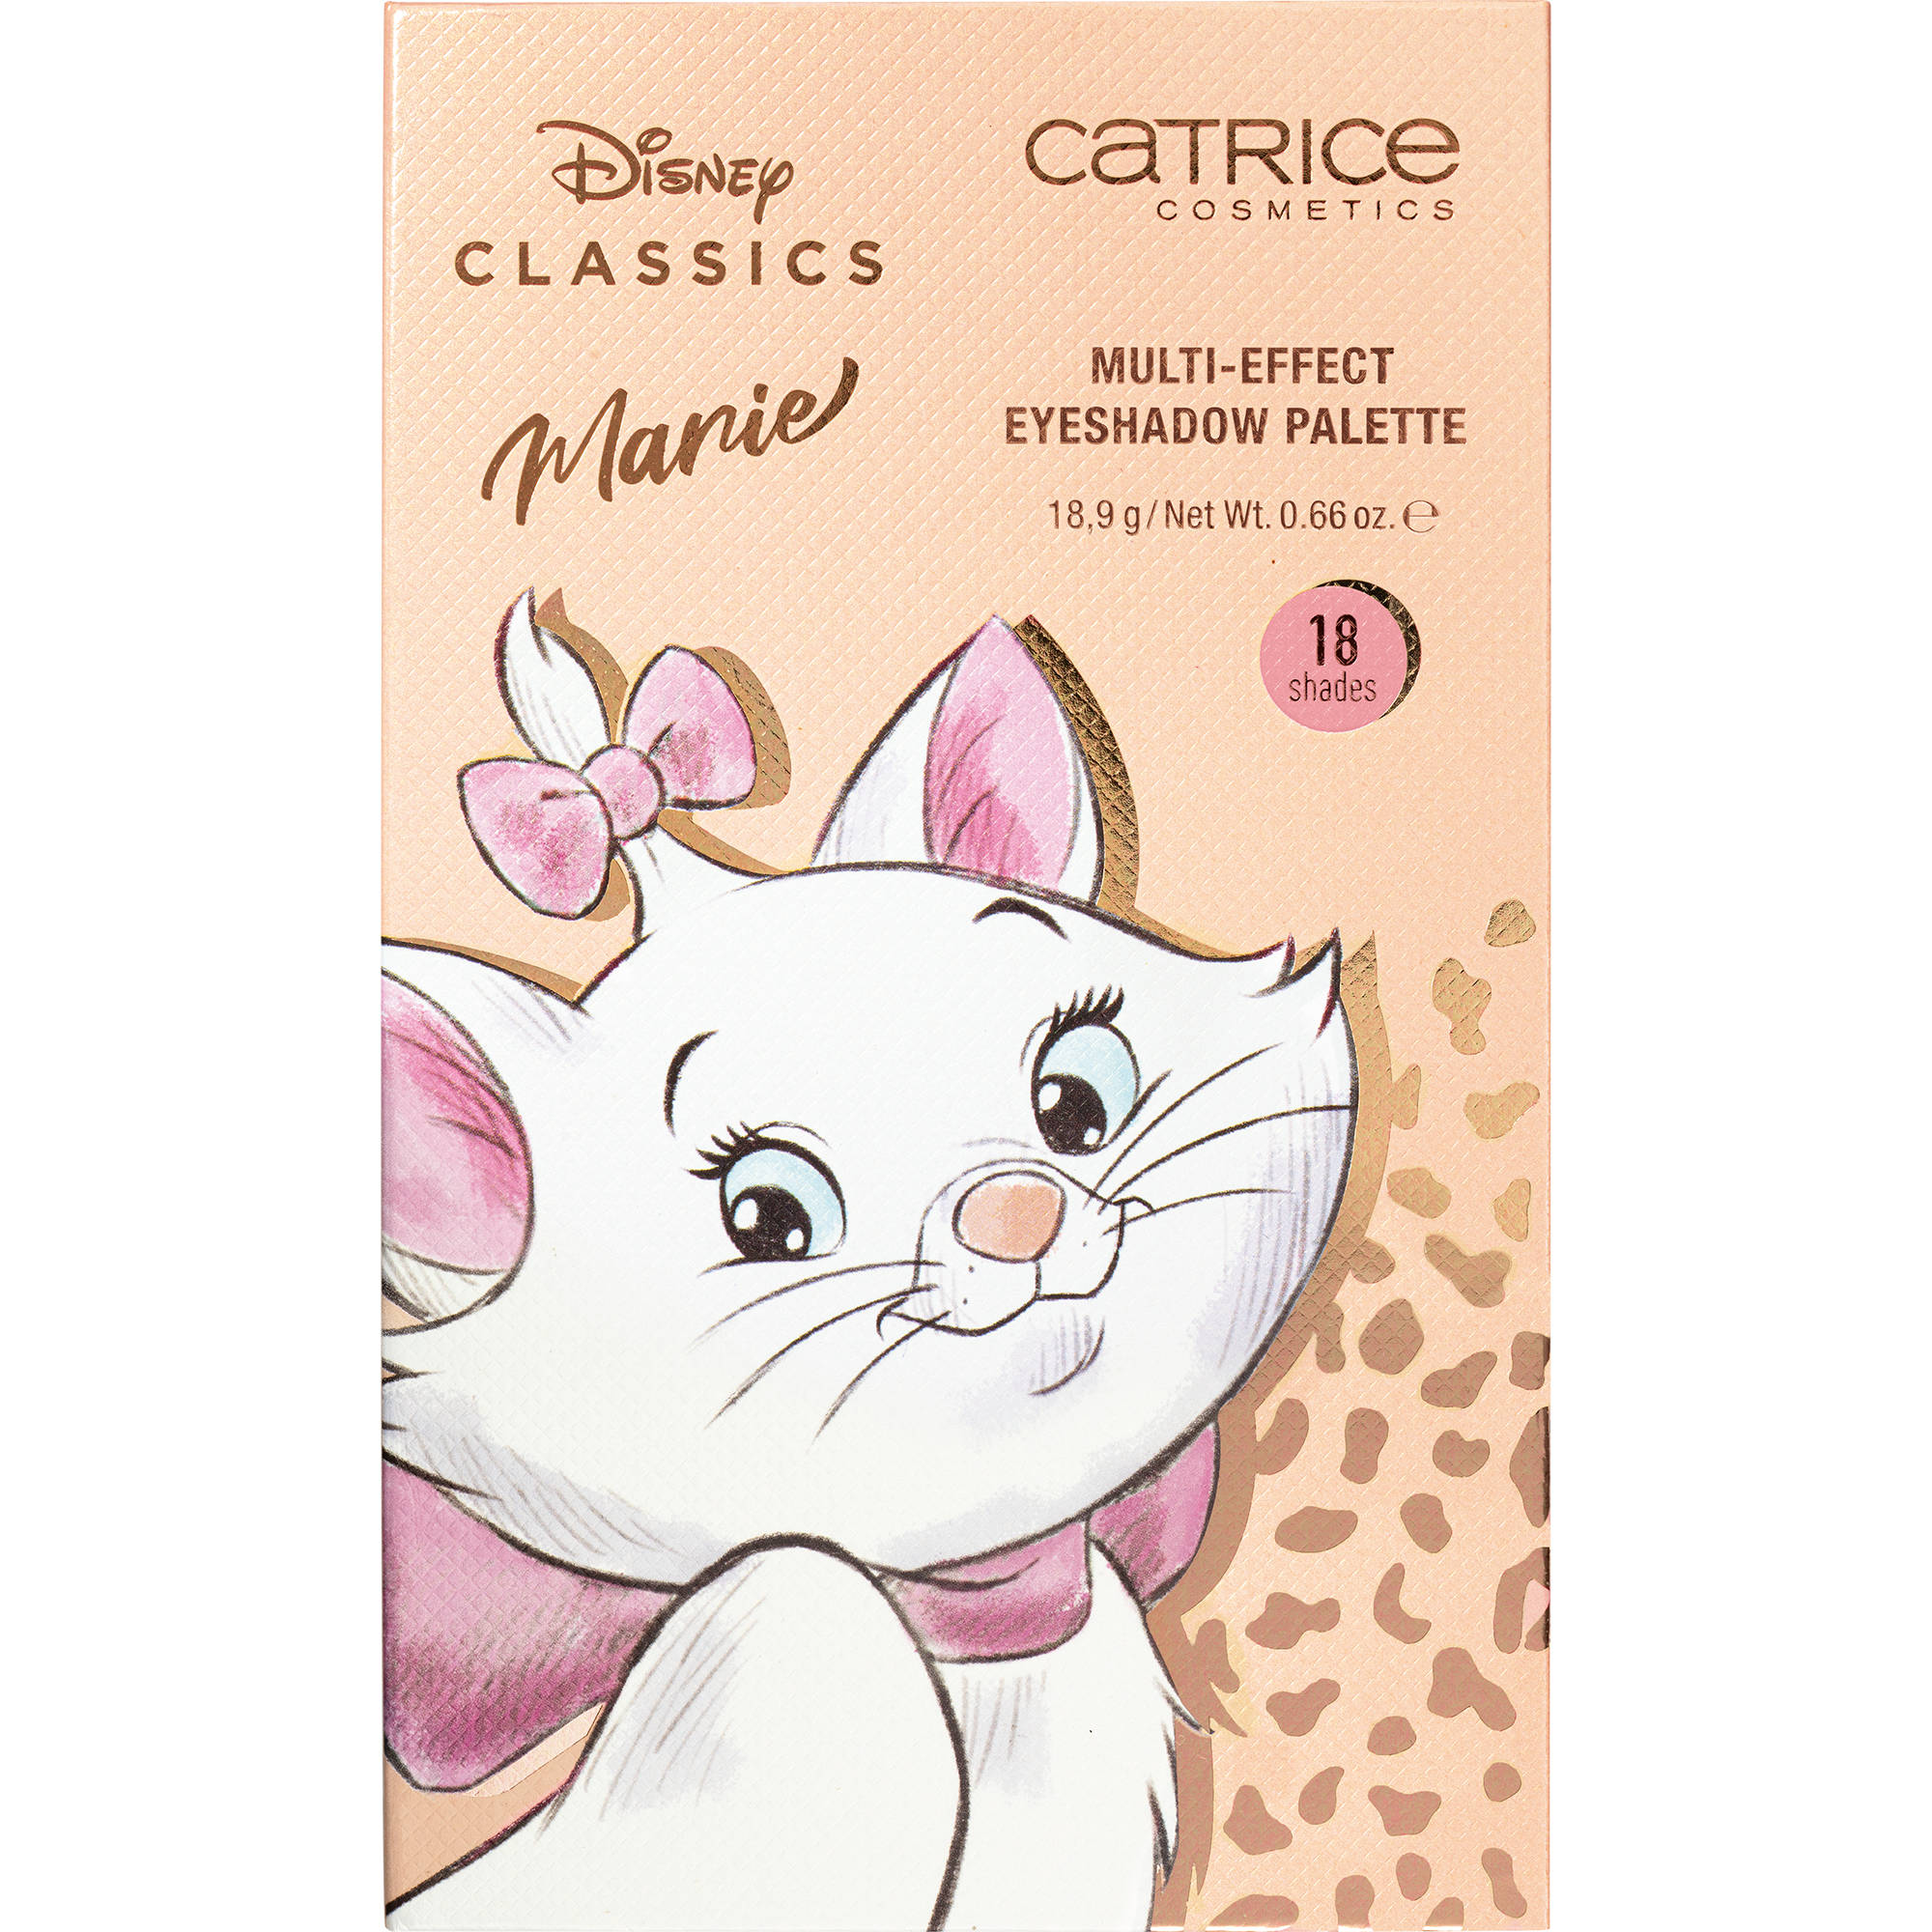 Disney Classics Marie Multi-Effect Eyeshadow Palette